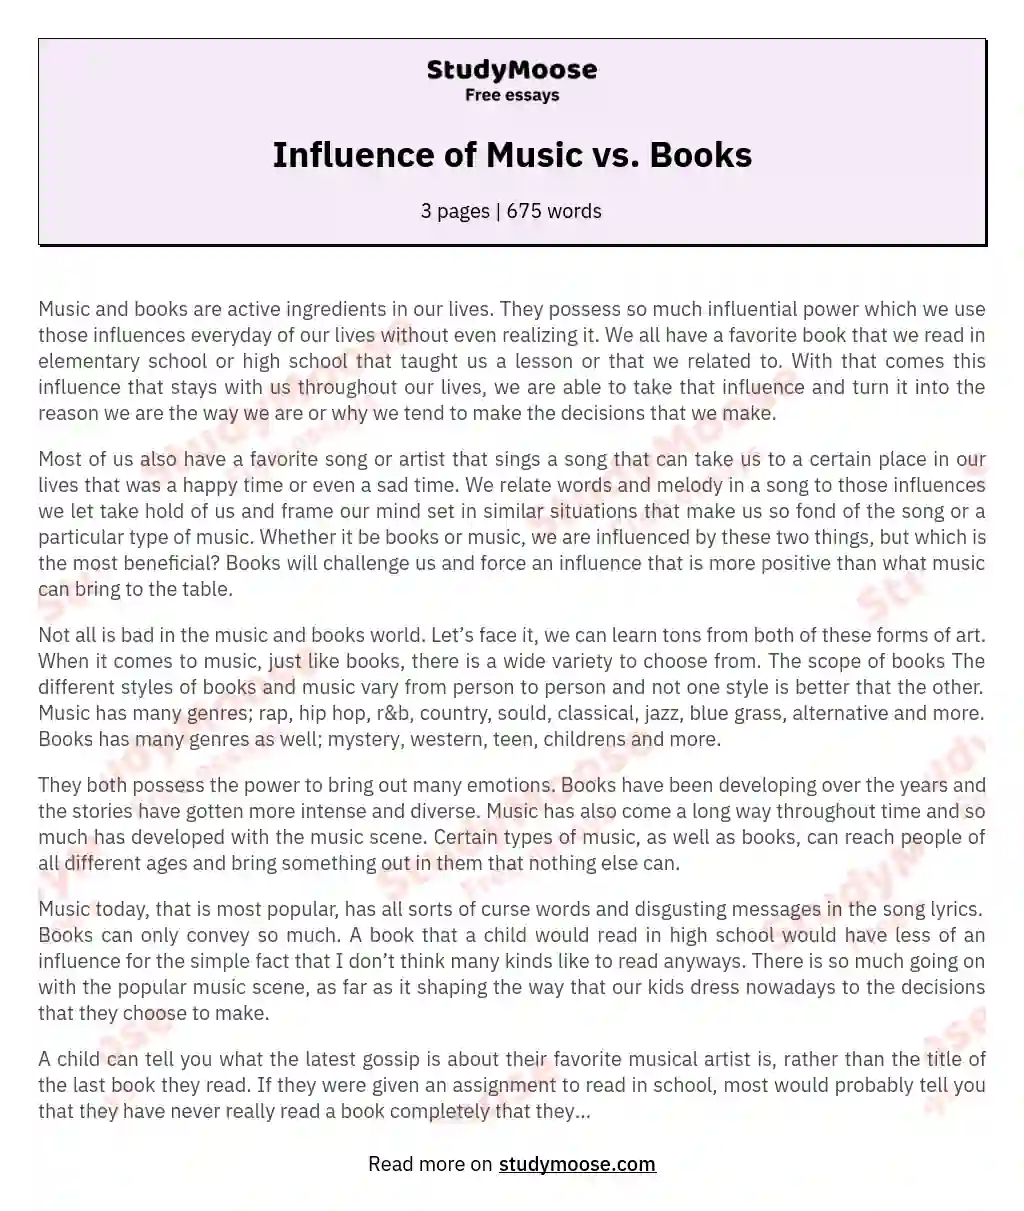 Influence of Music vs. Books essay